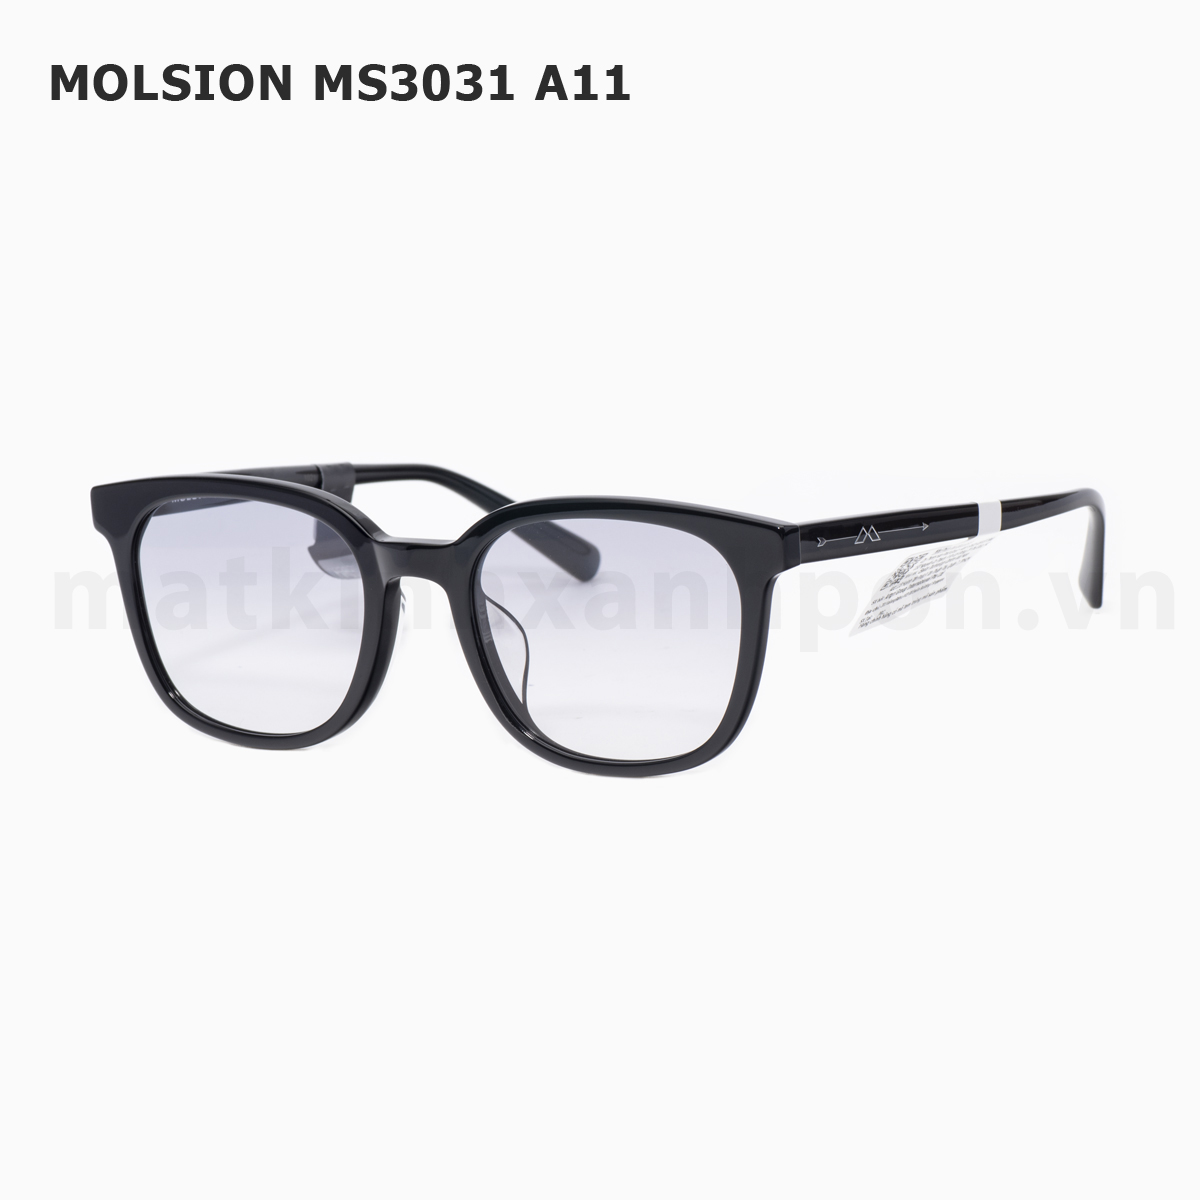 Molsion MS3031 A11